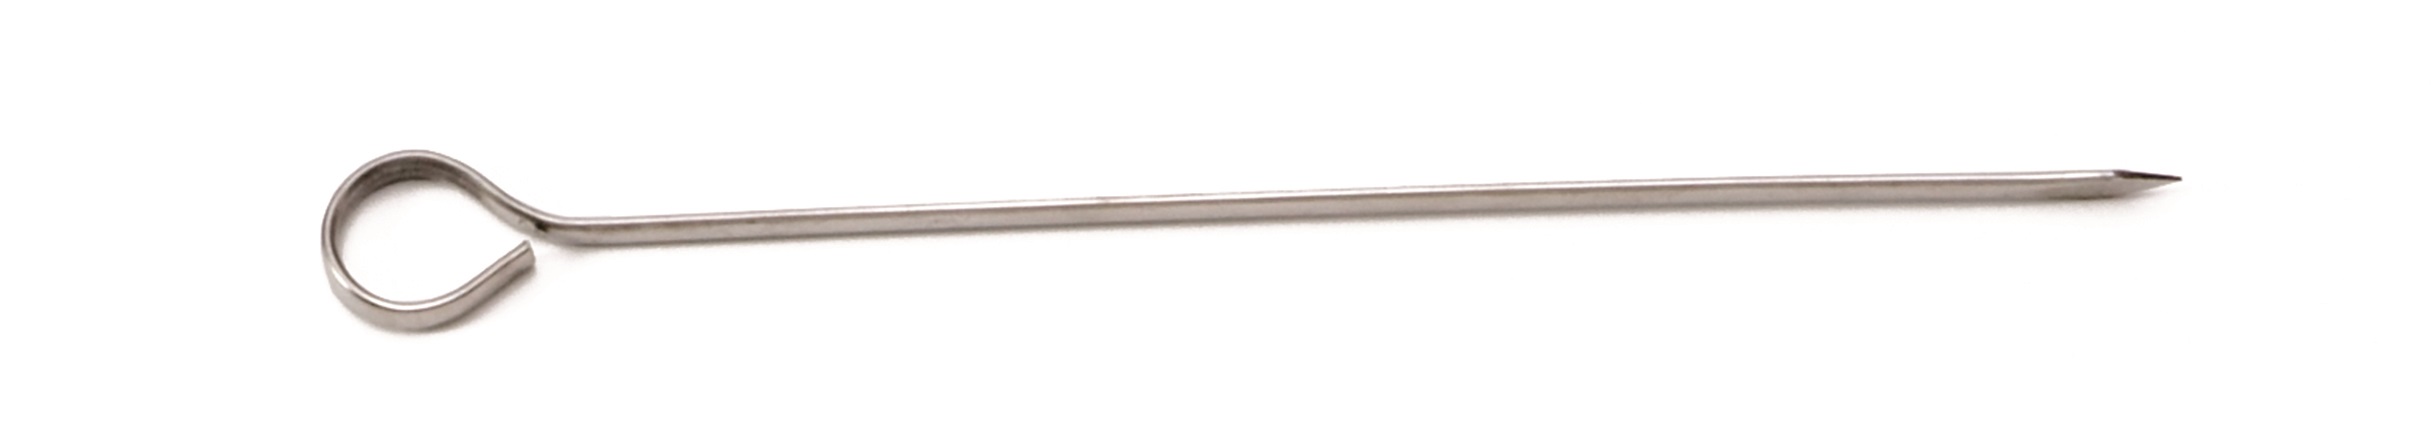 312  Stainless Steel Oval Skewer 30,5cm TABLECRAFT